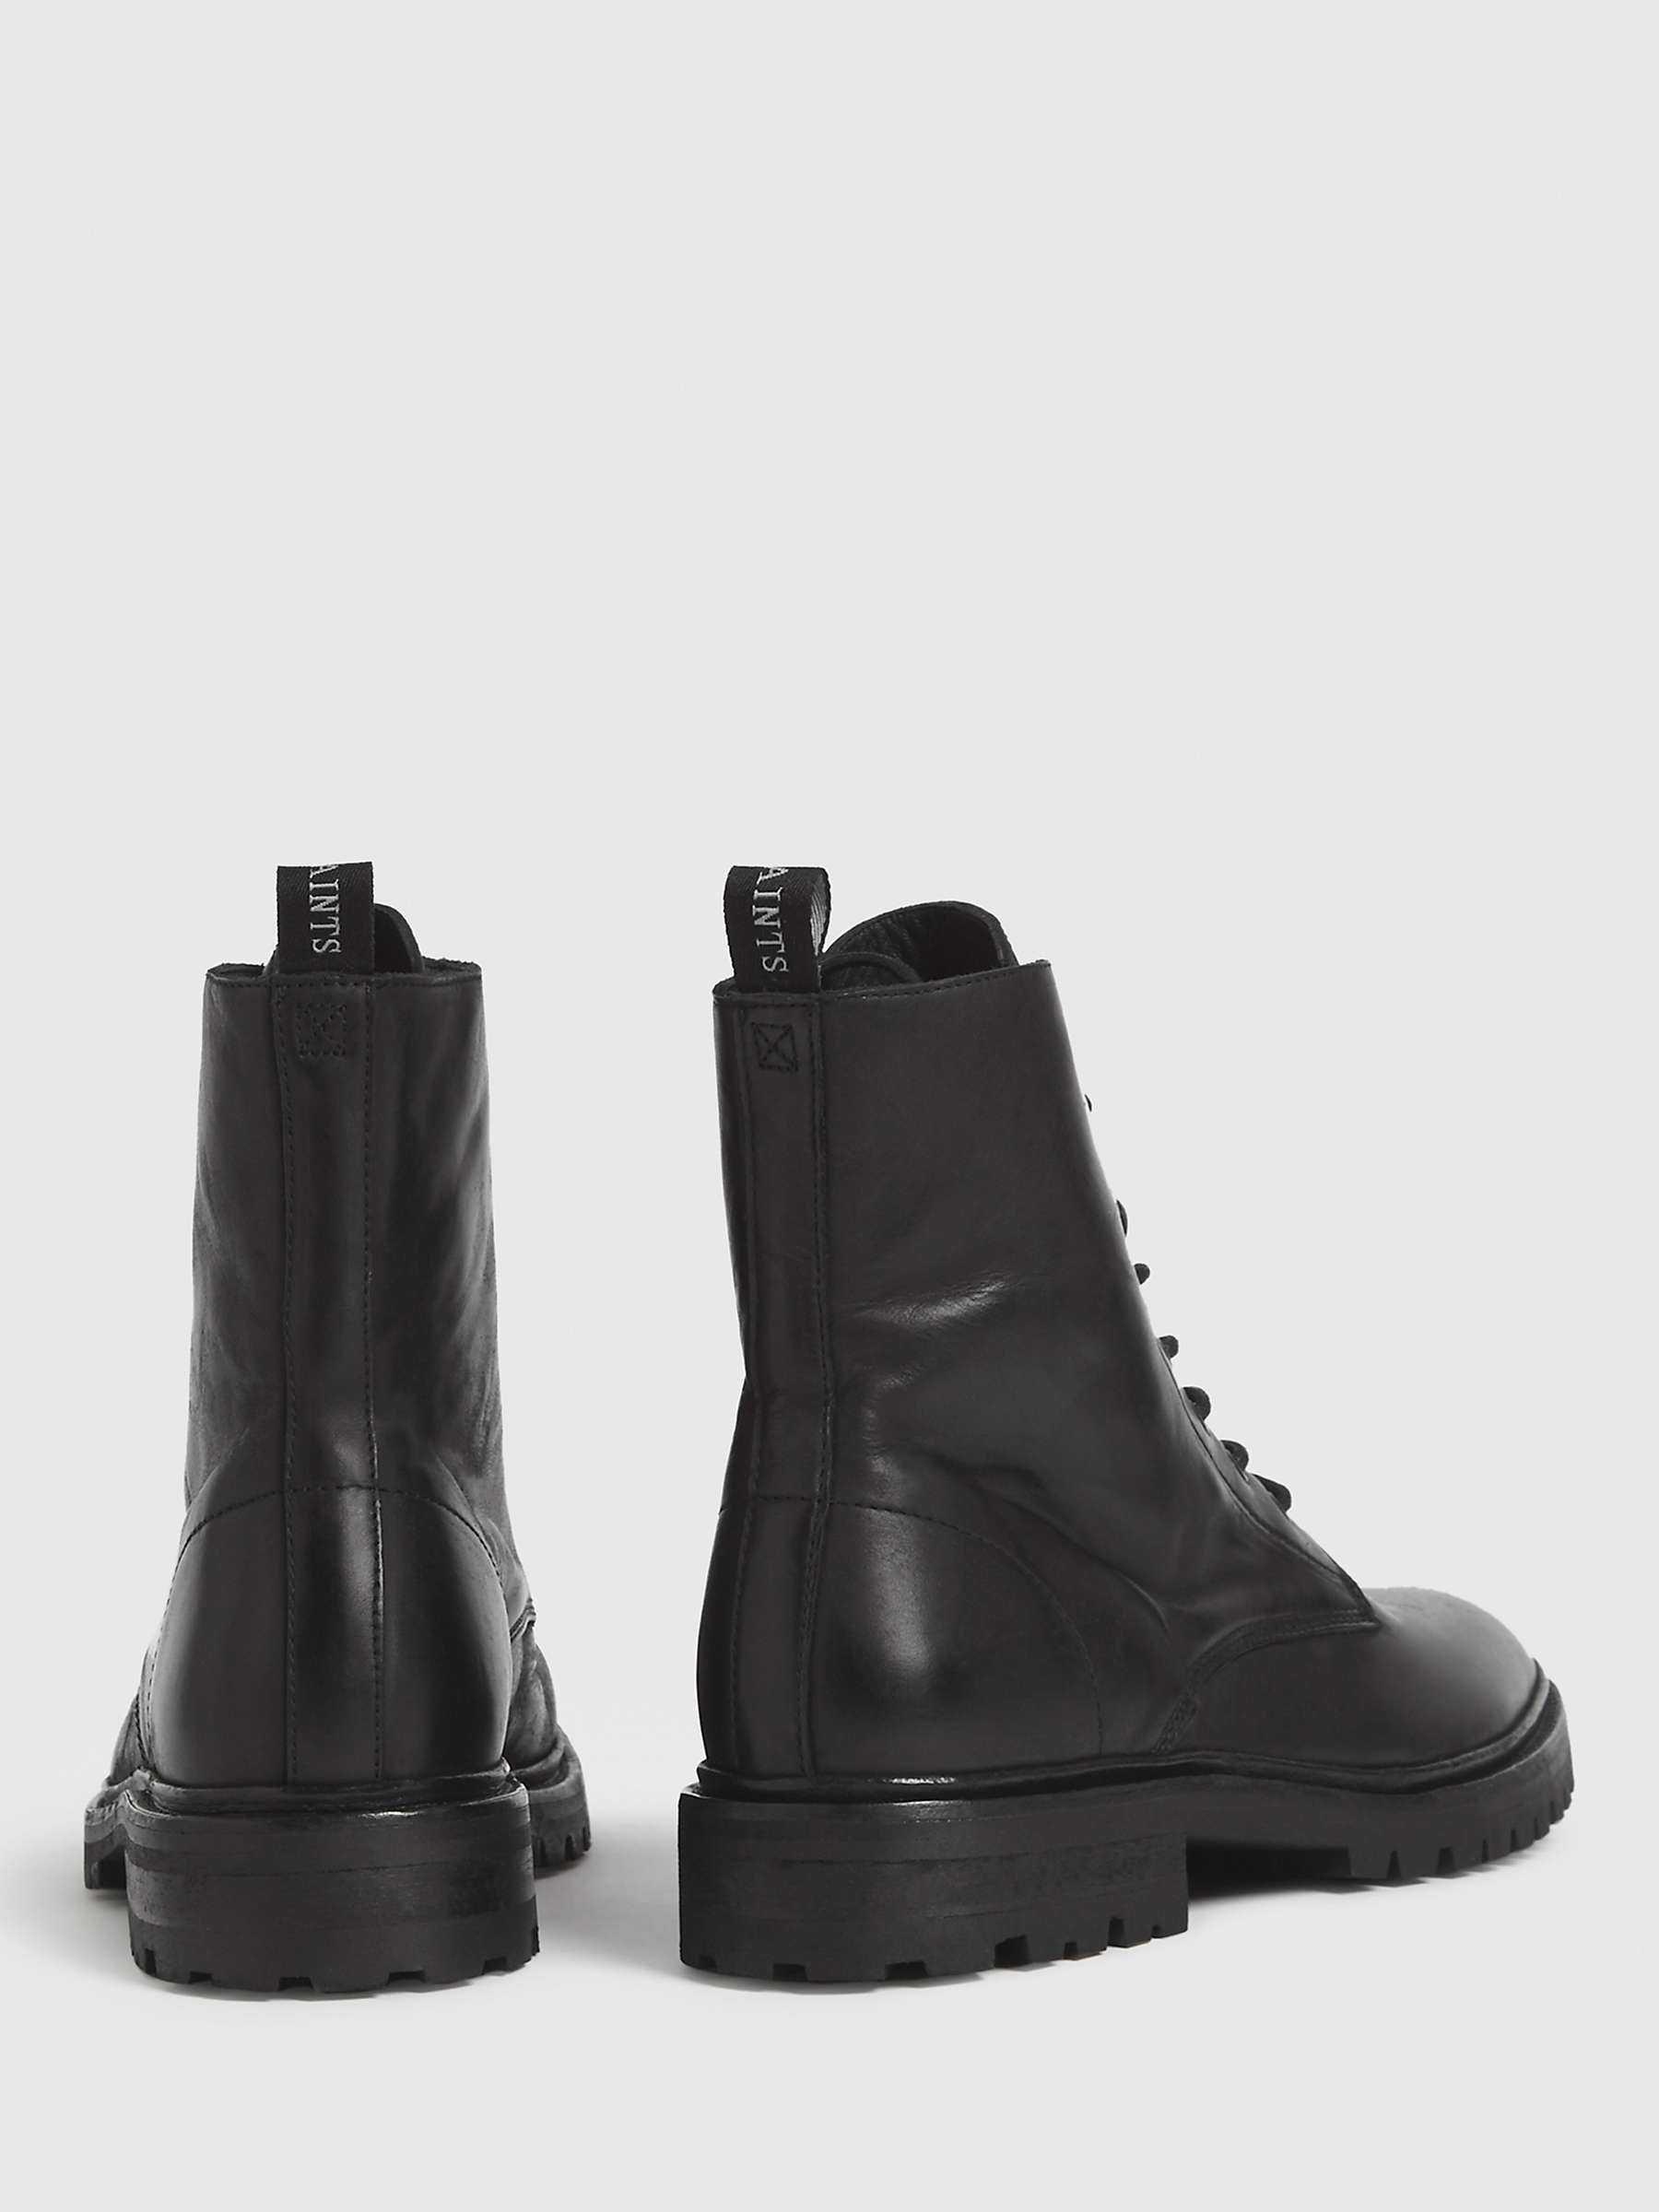 AllSaints Tobias Leather Military Boots, Black at John Lewis & Partners